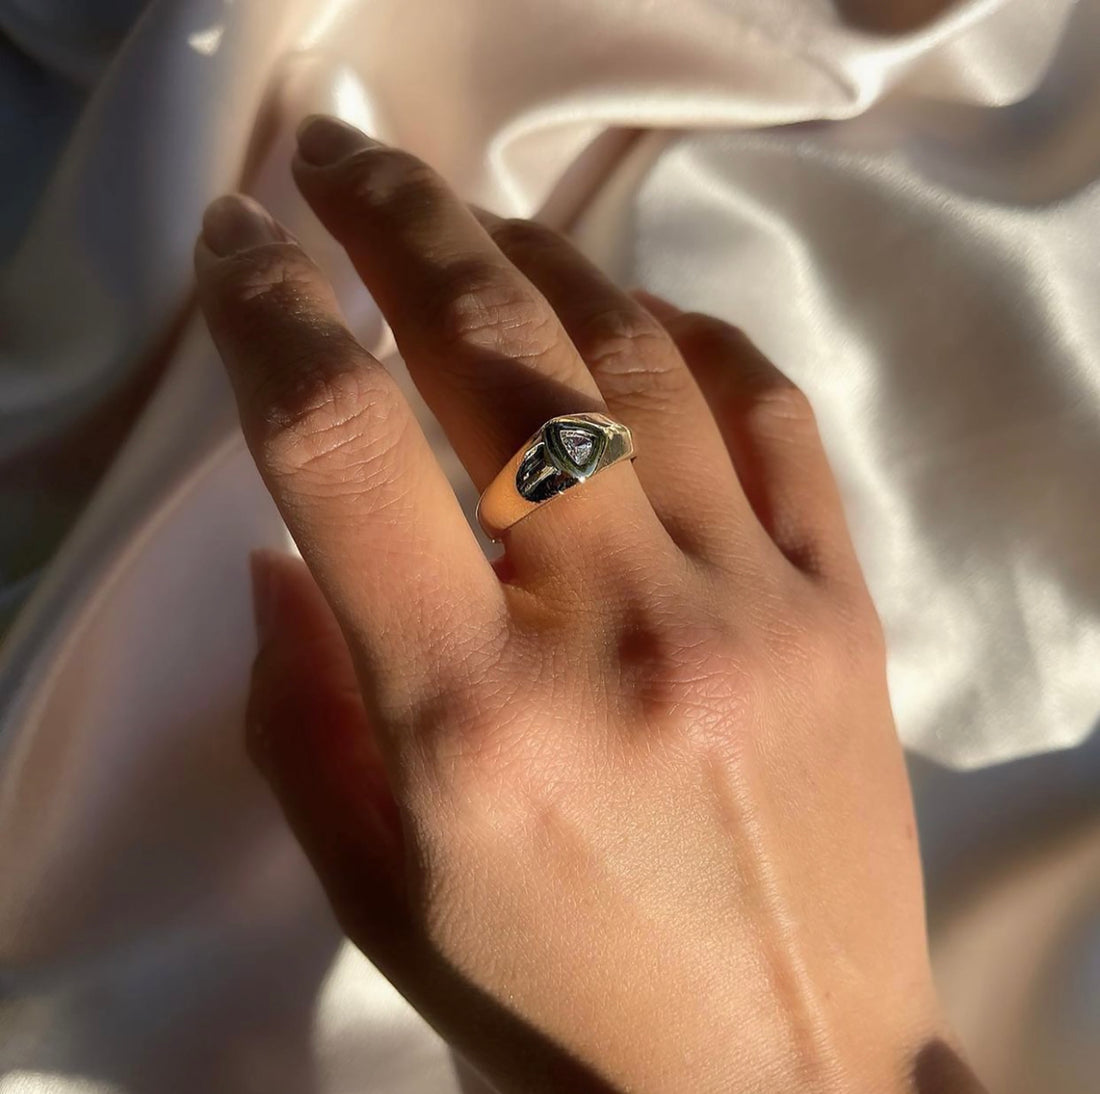 Vintage 14k Yellow Gold .30-Carat (G/VS) Trillion-Cut Diamond Solitaire Ring, Engagement, Bridal Wedding Anniversary Gift Idea on Hand